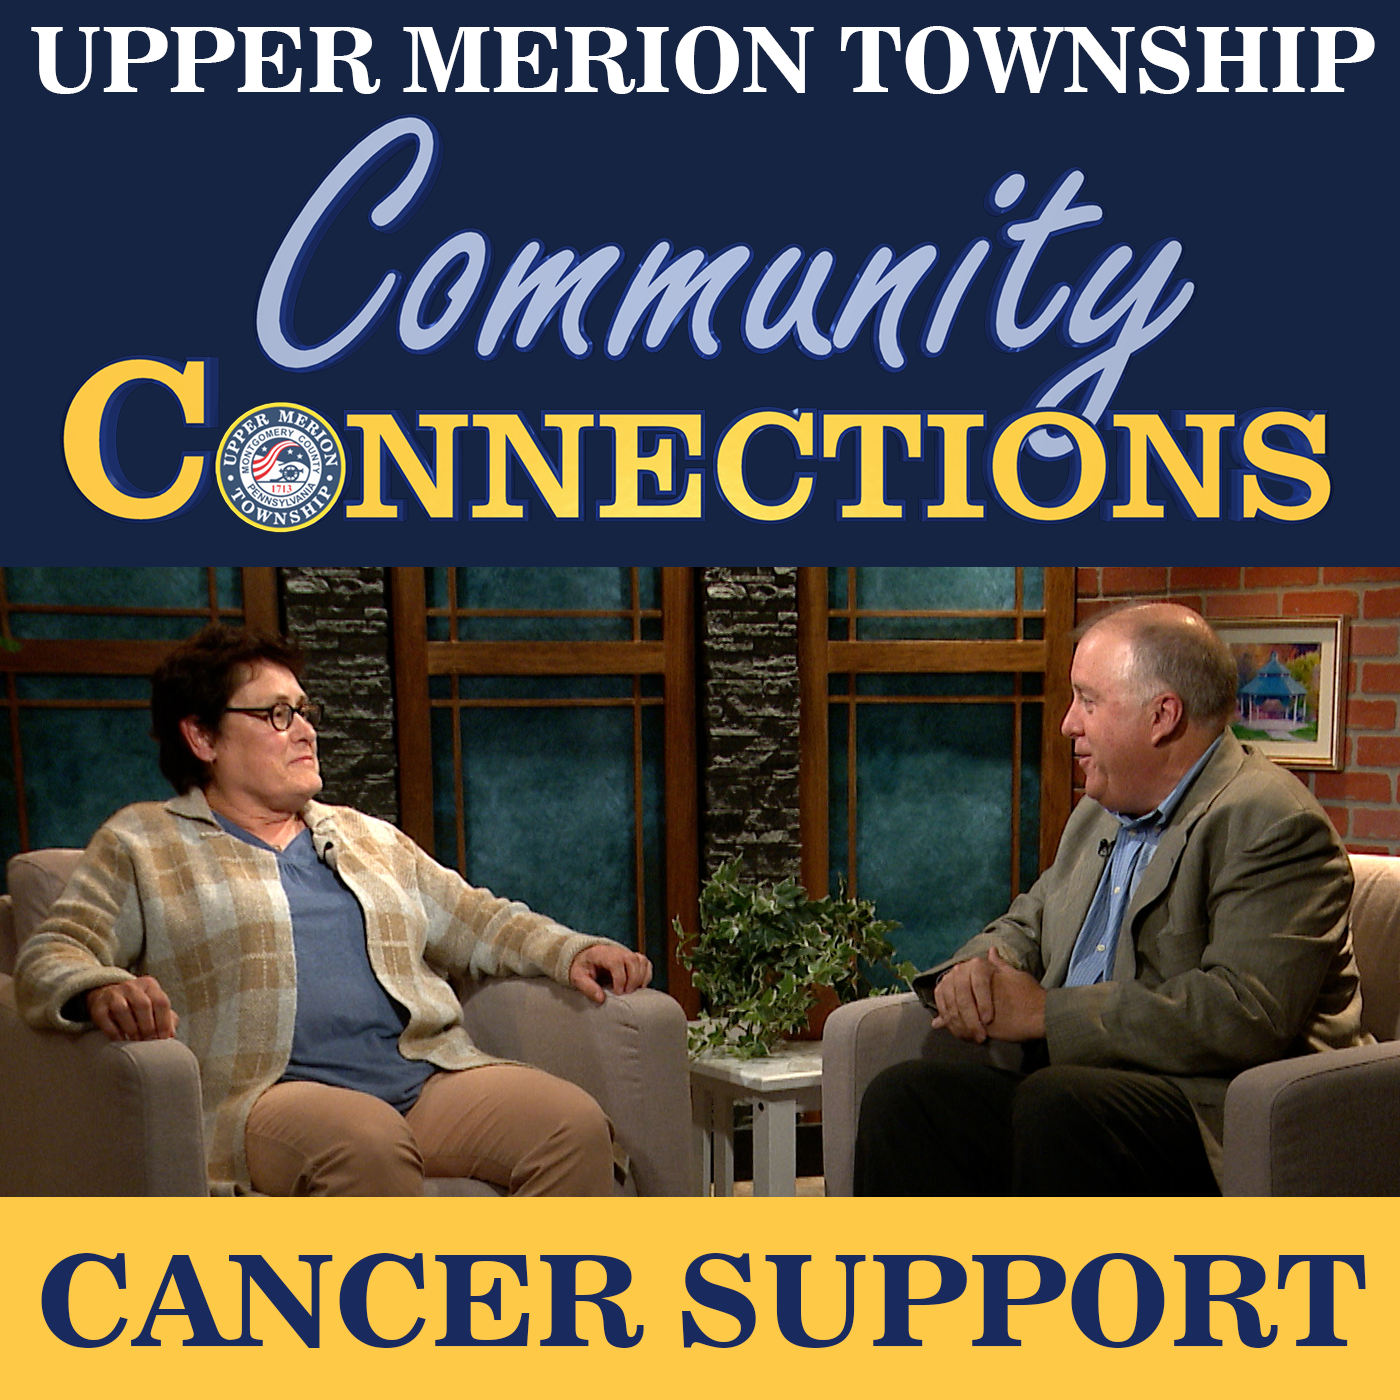 Cancer Support Community Greater Philadelphia